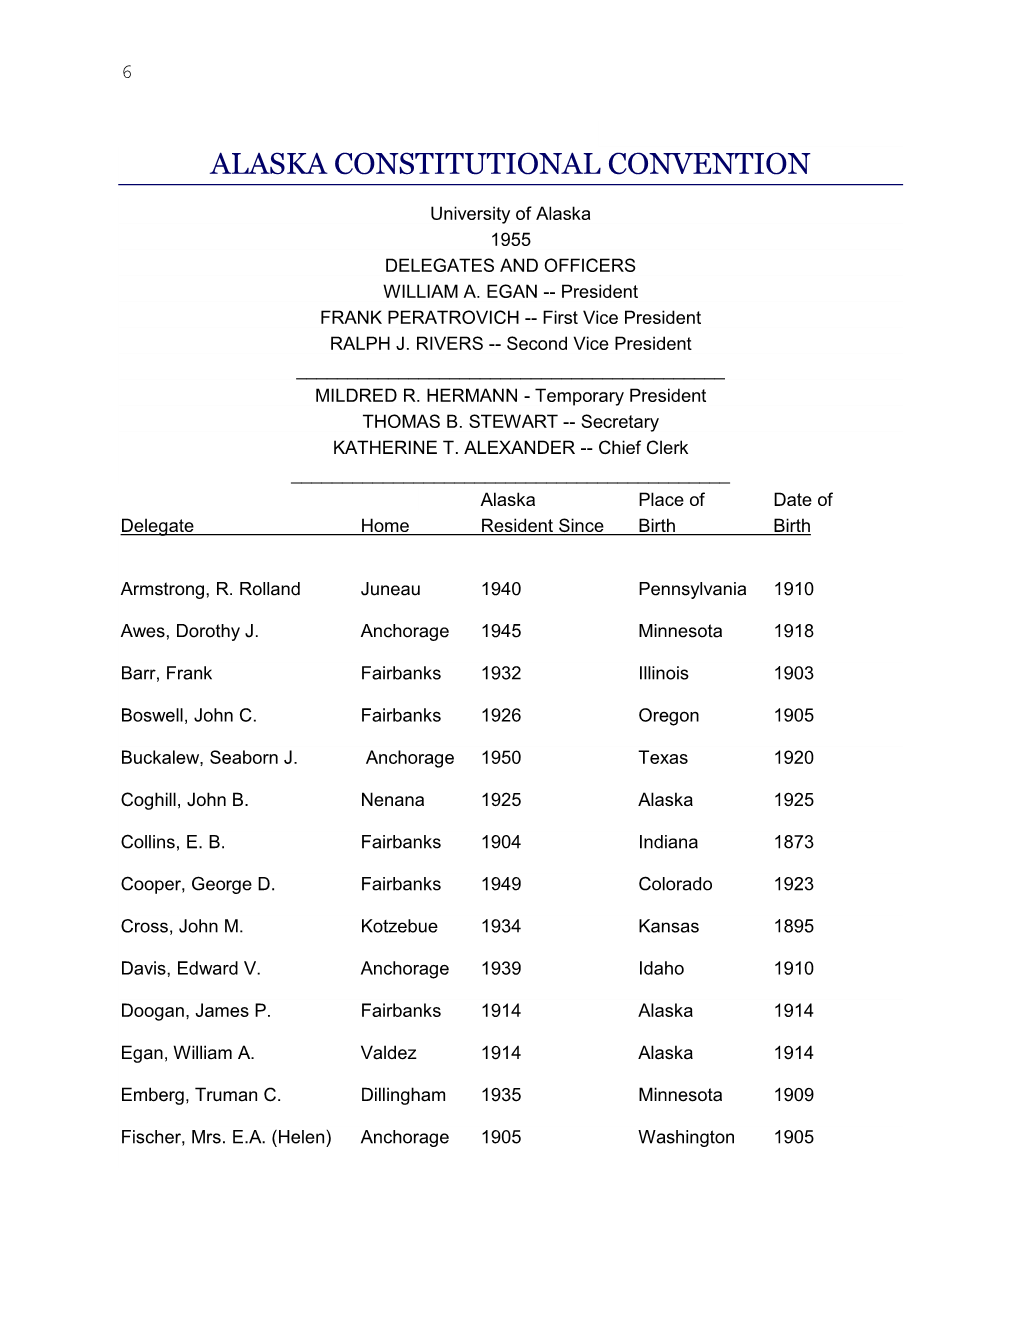 Alaska Constitutional Convention